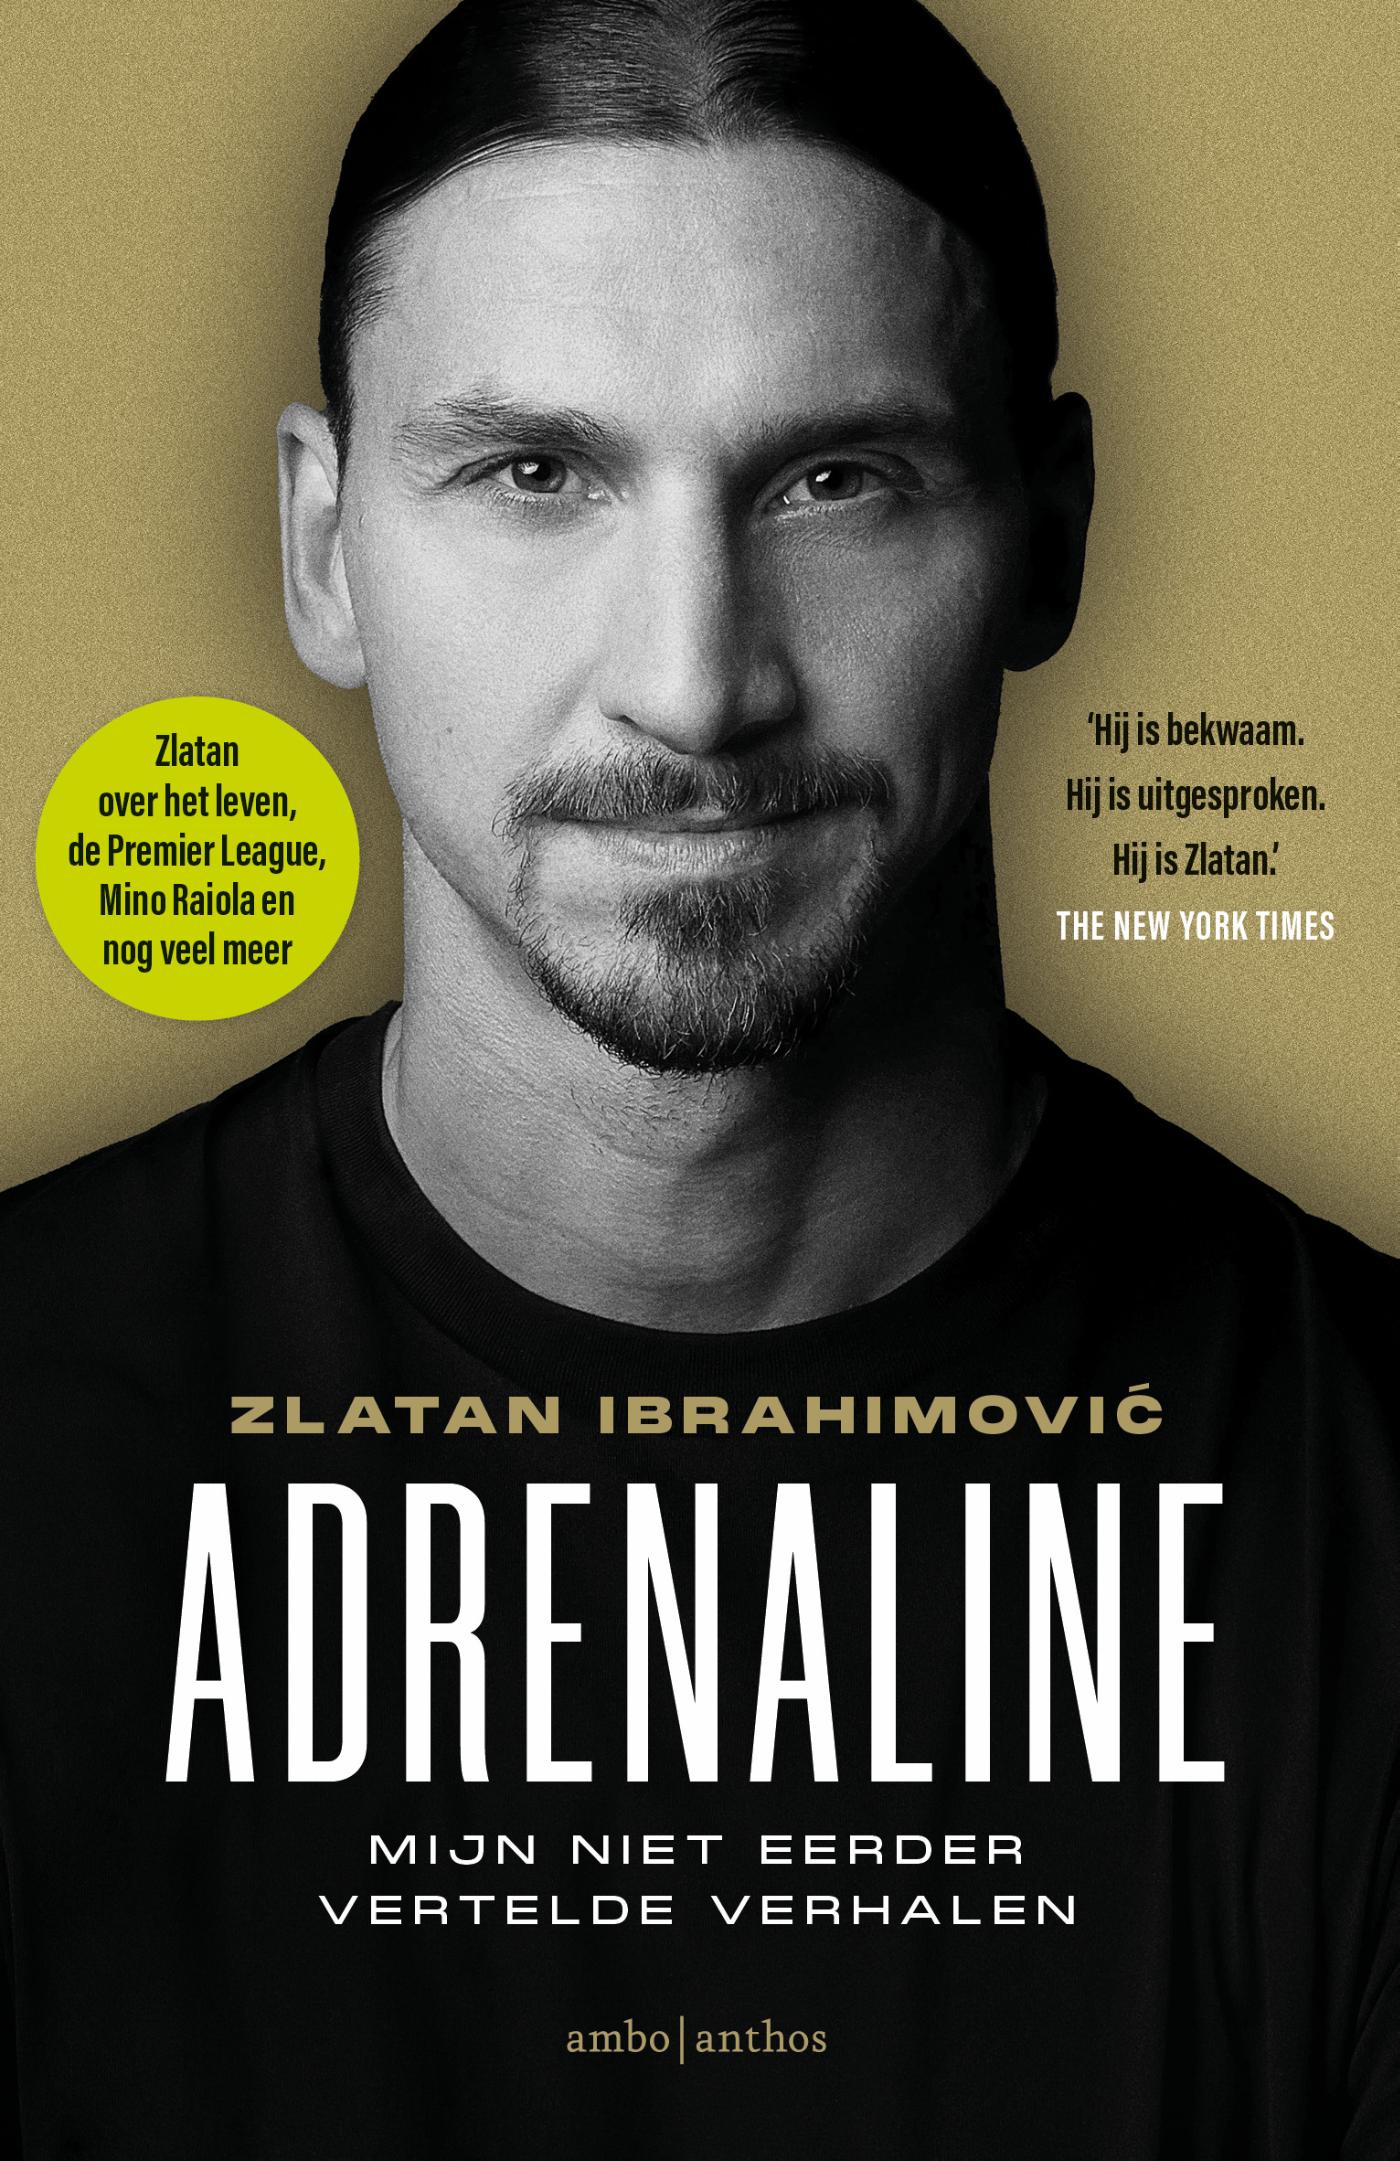 Zlatan Ibrahimovic - Adrenaline